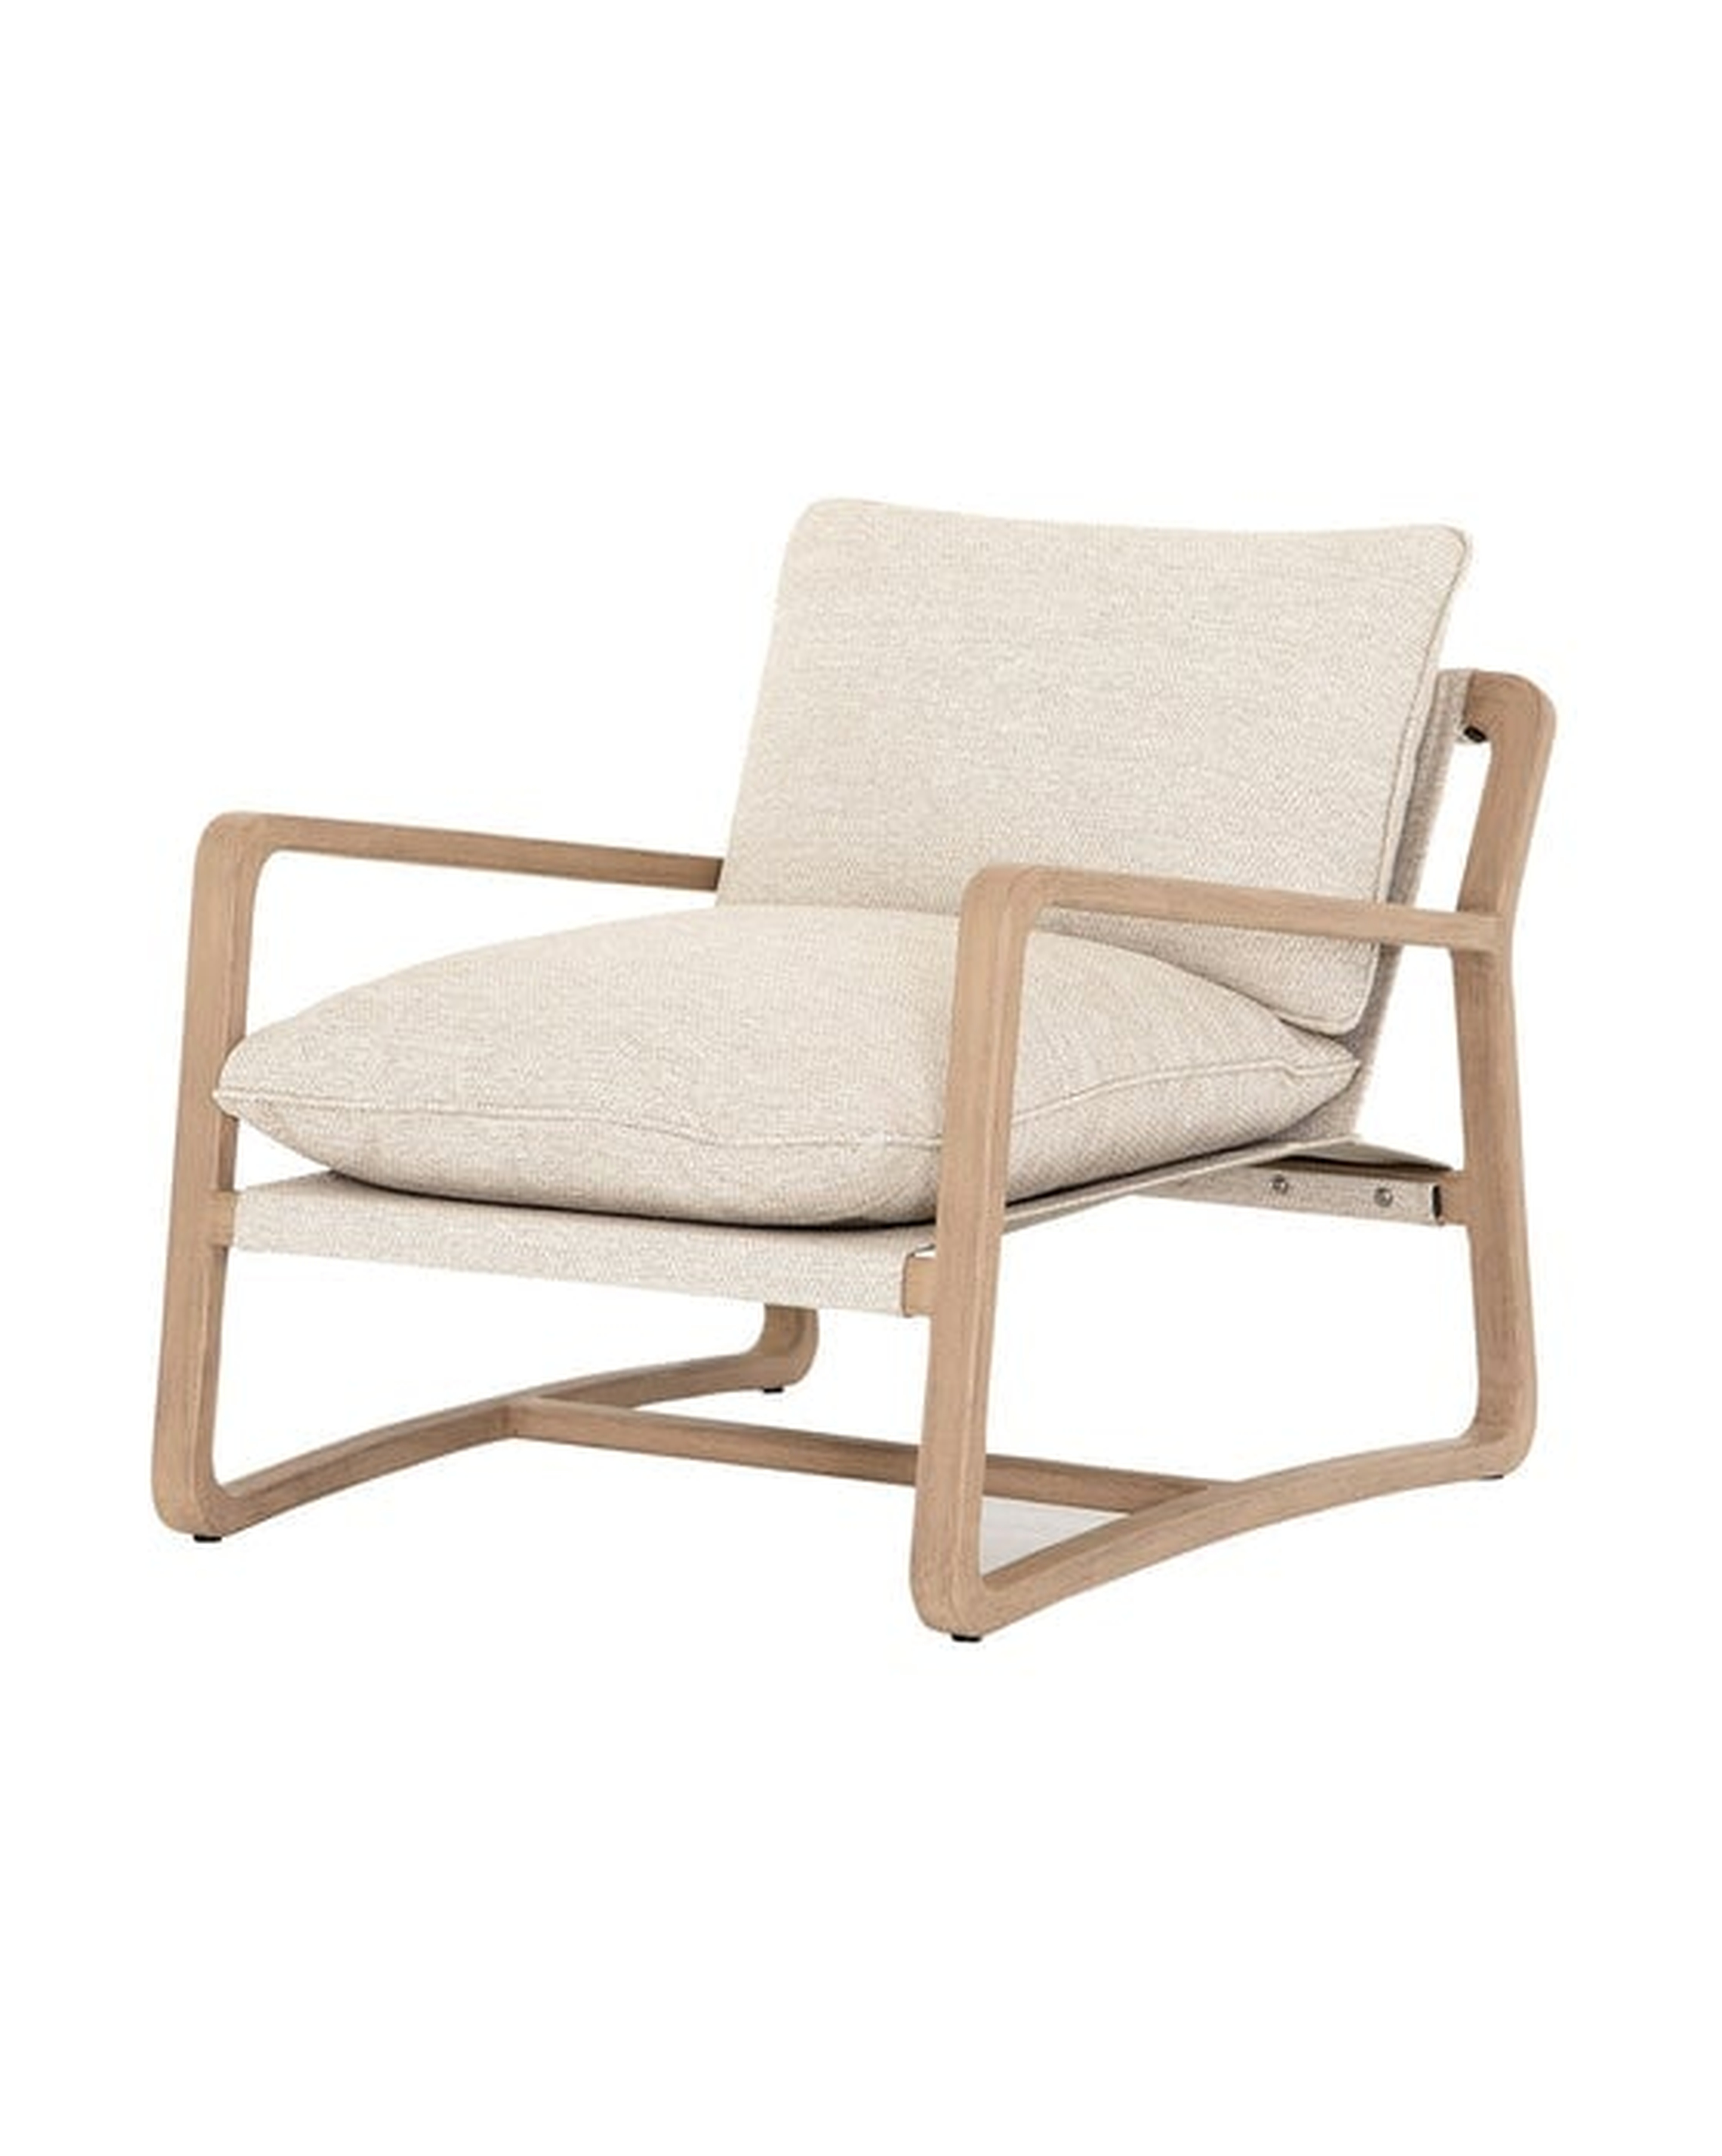 Ura Outdoor Chair - McGee & Co.